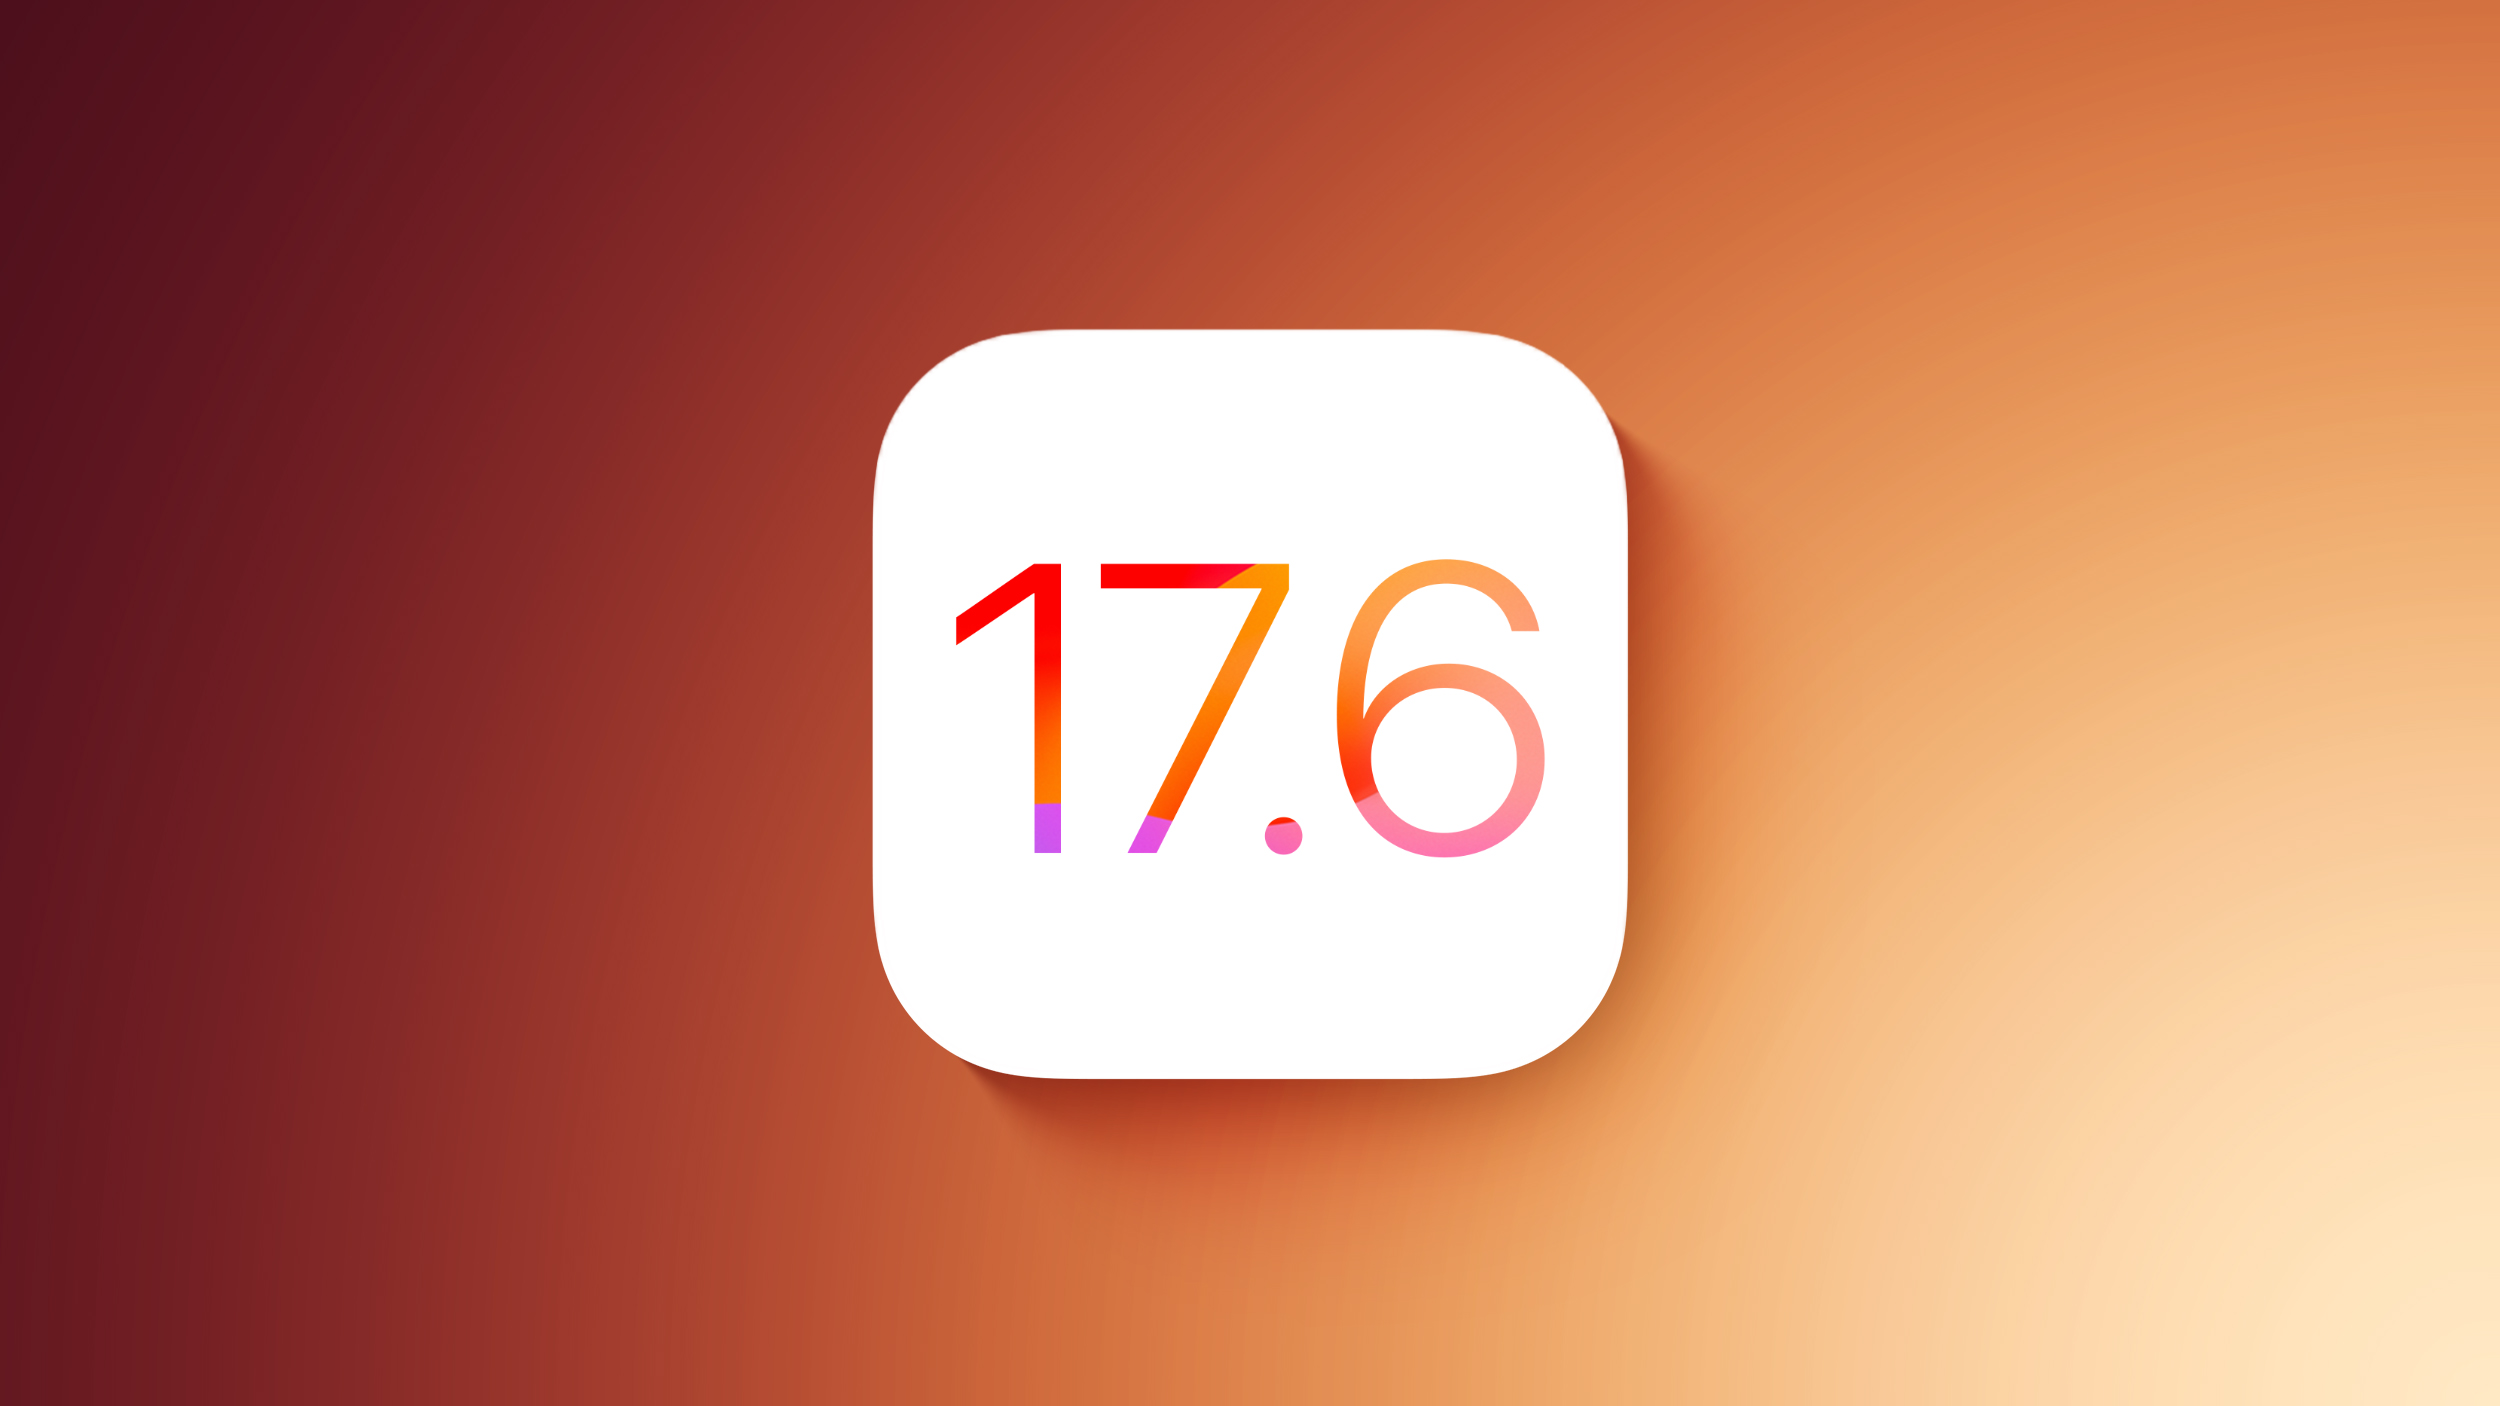 Apple Releases Second Public Beta of iOS 17.6